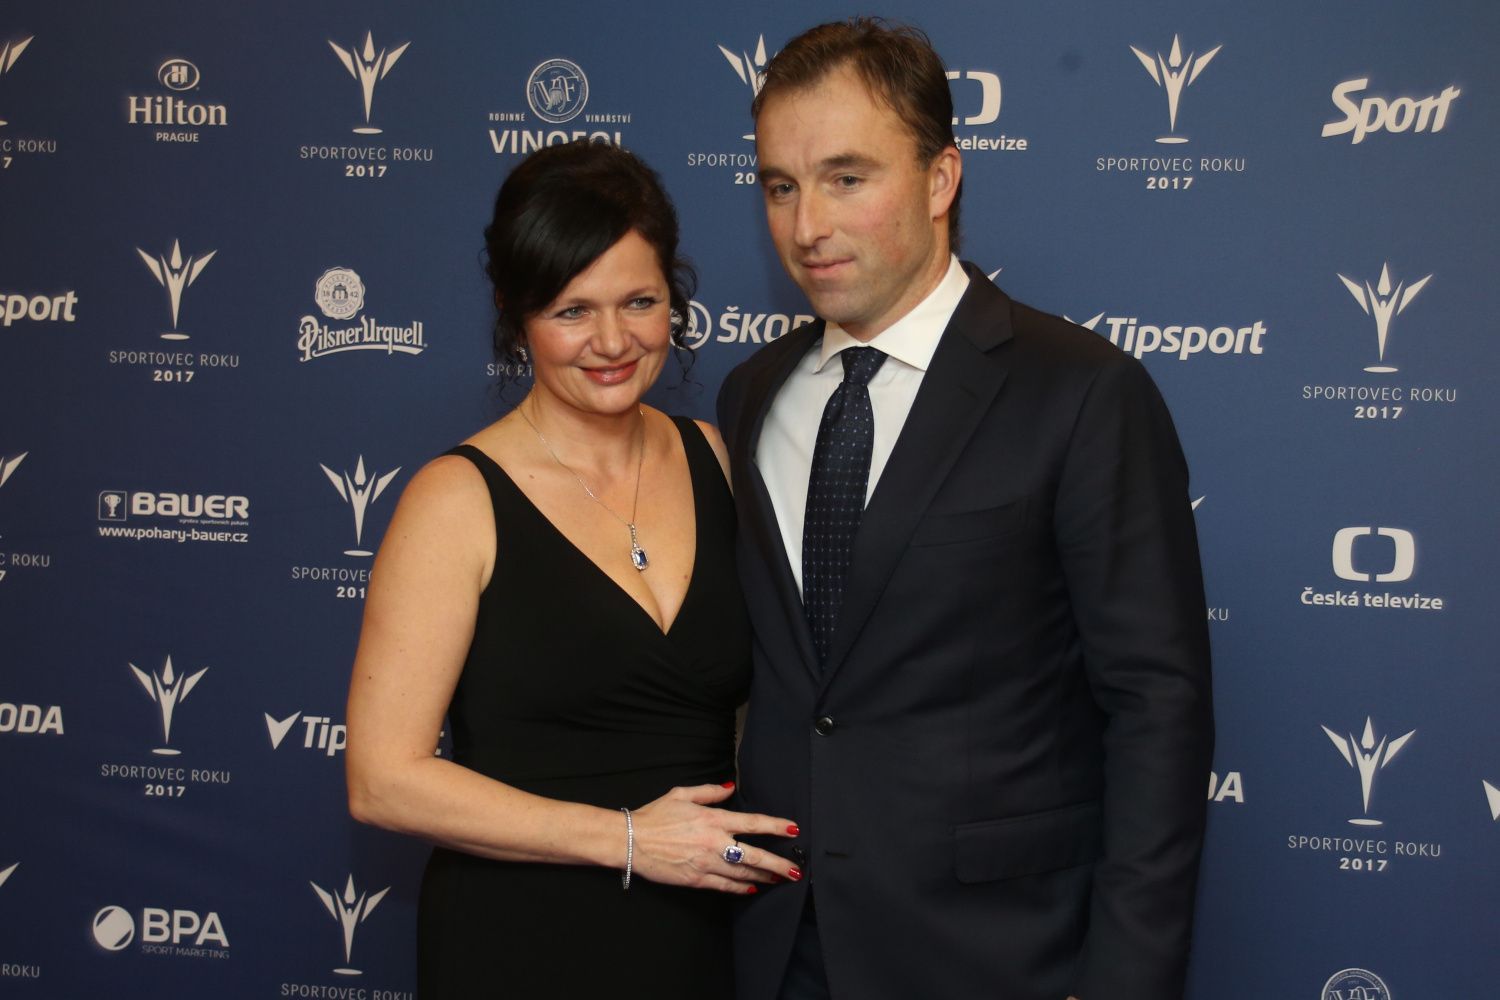 Sportovec roku 2017: Milan Hnilička a manželka Radka